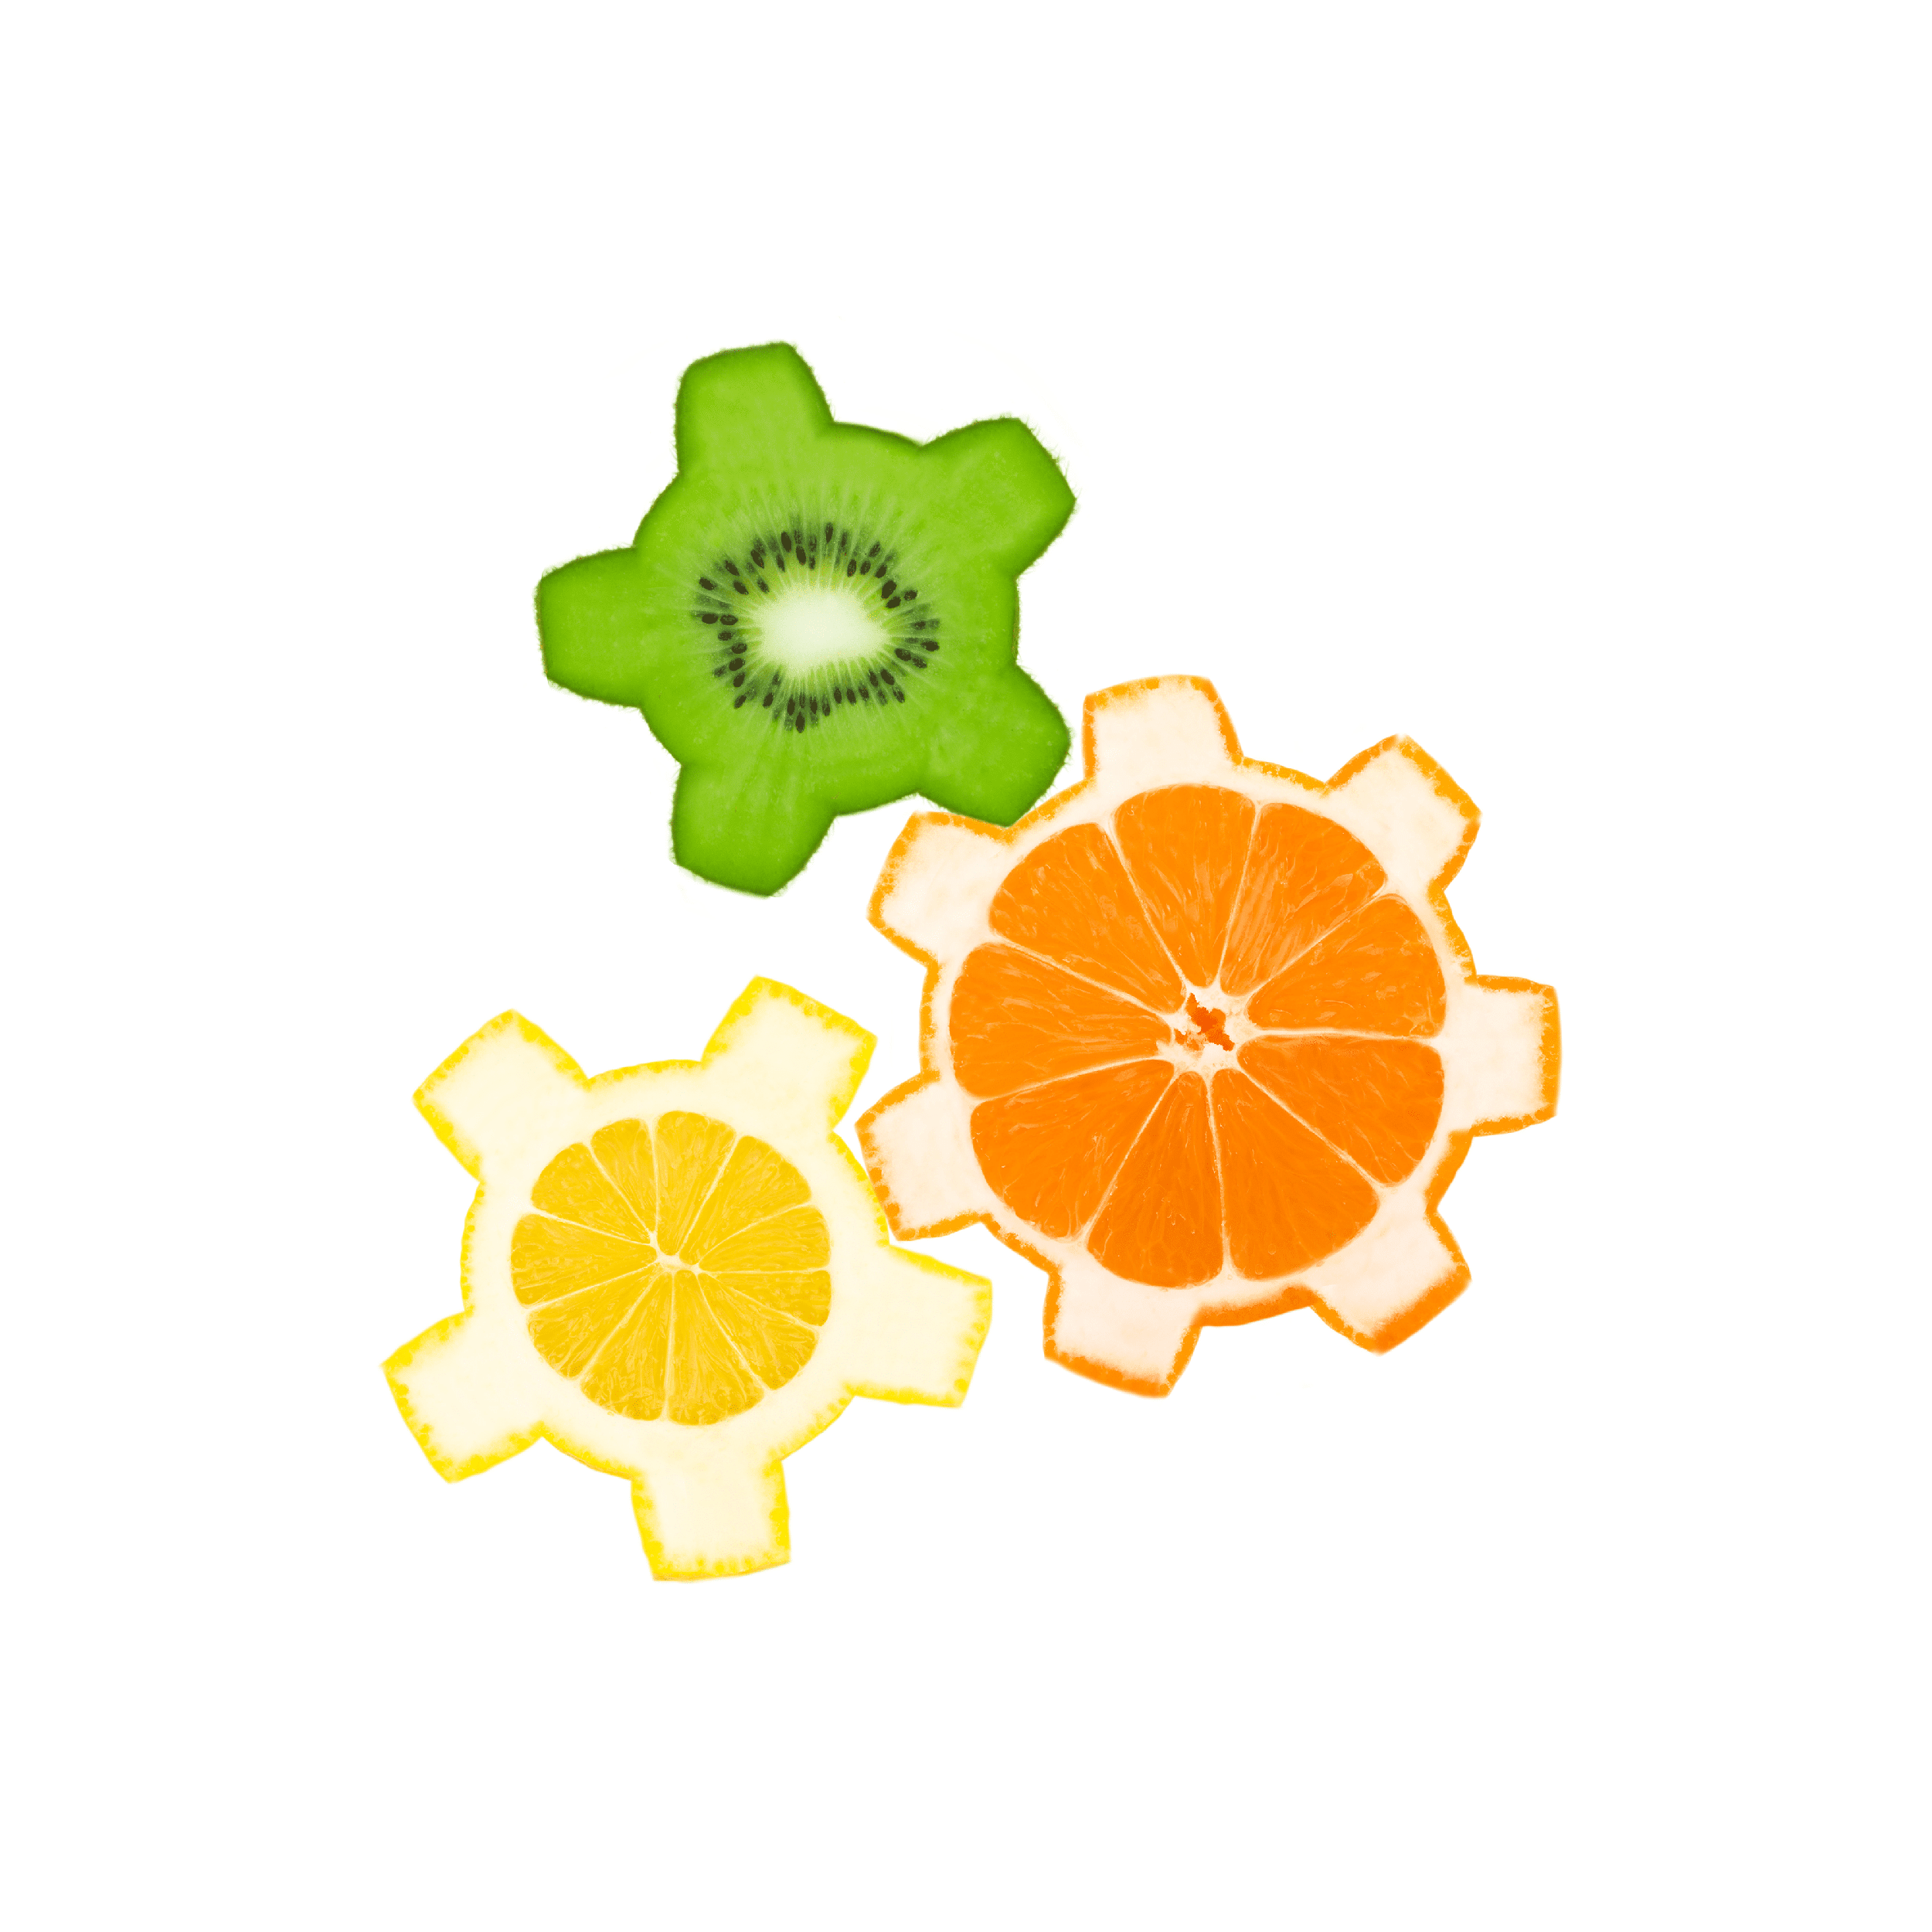 It is fruit-cogs contains of Orange, lemon and Kiwi